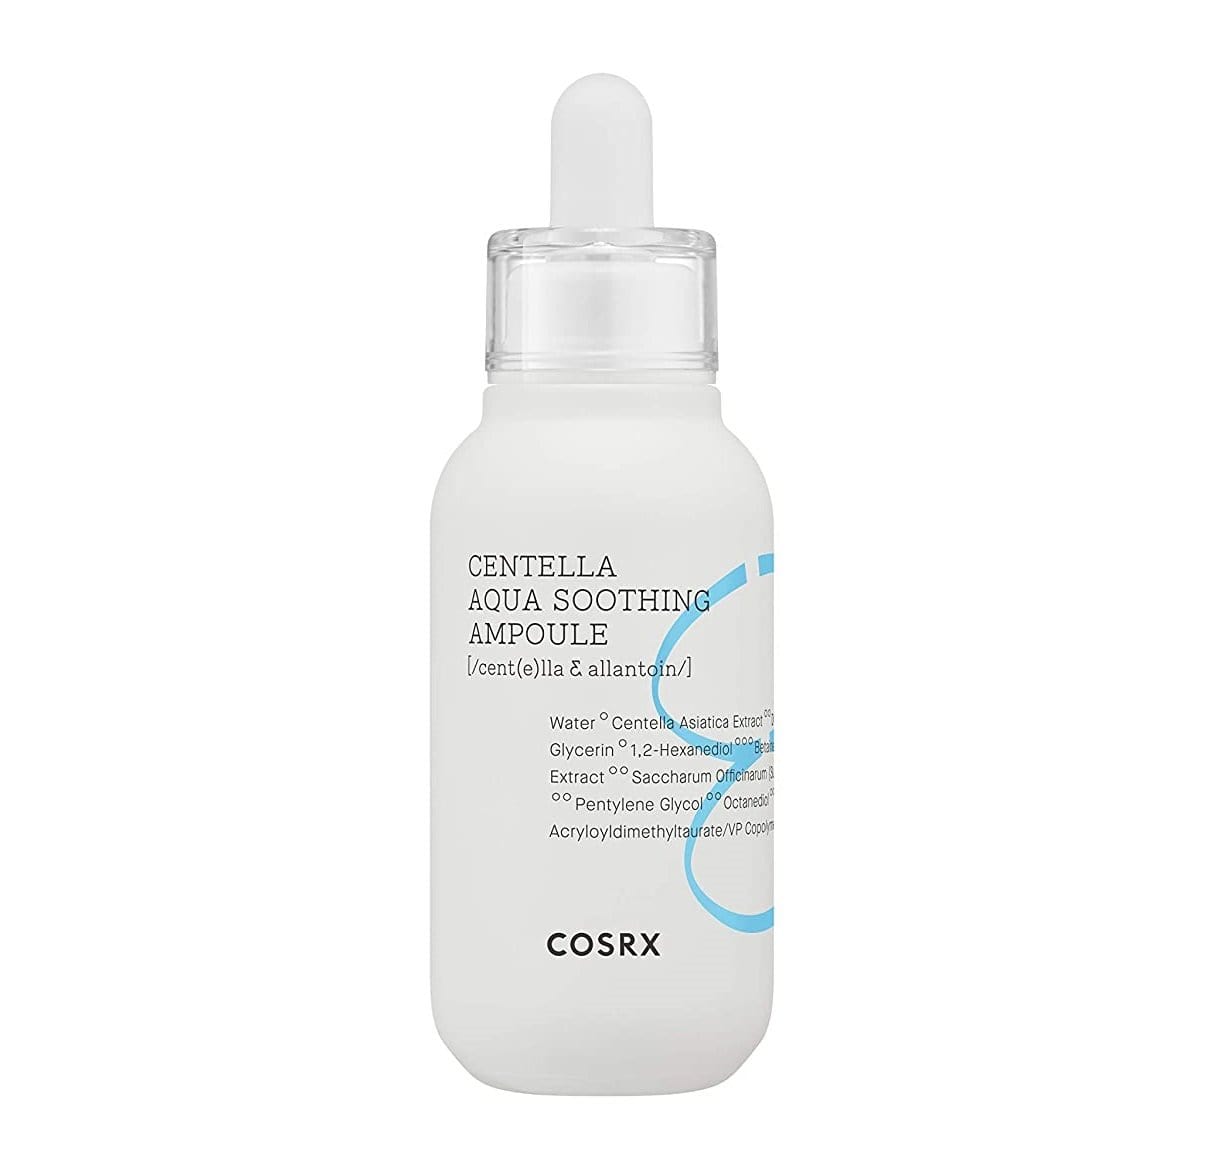 COSRX Beauty COSRX Centella Aqua Soothing Ampoule 40ml